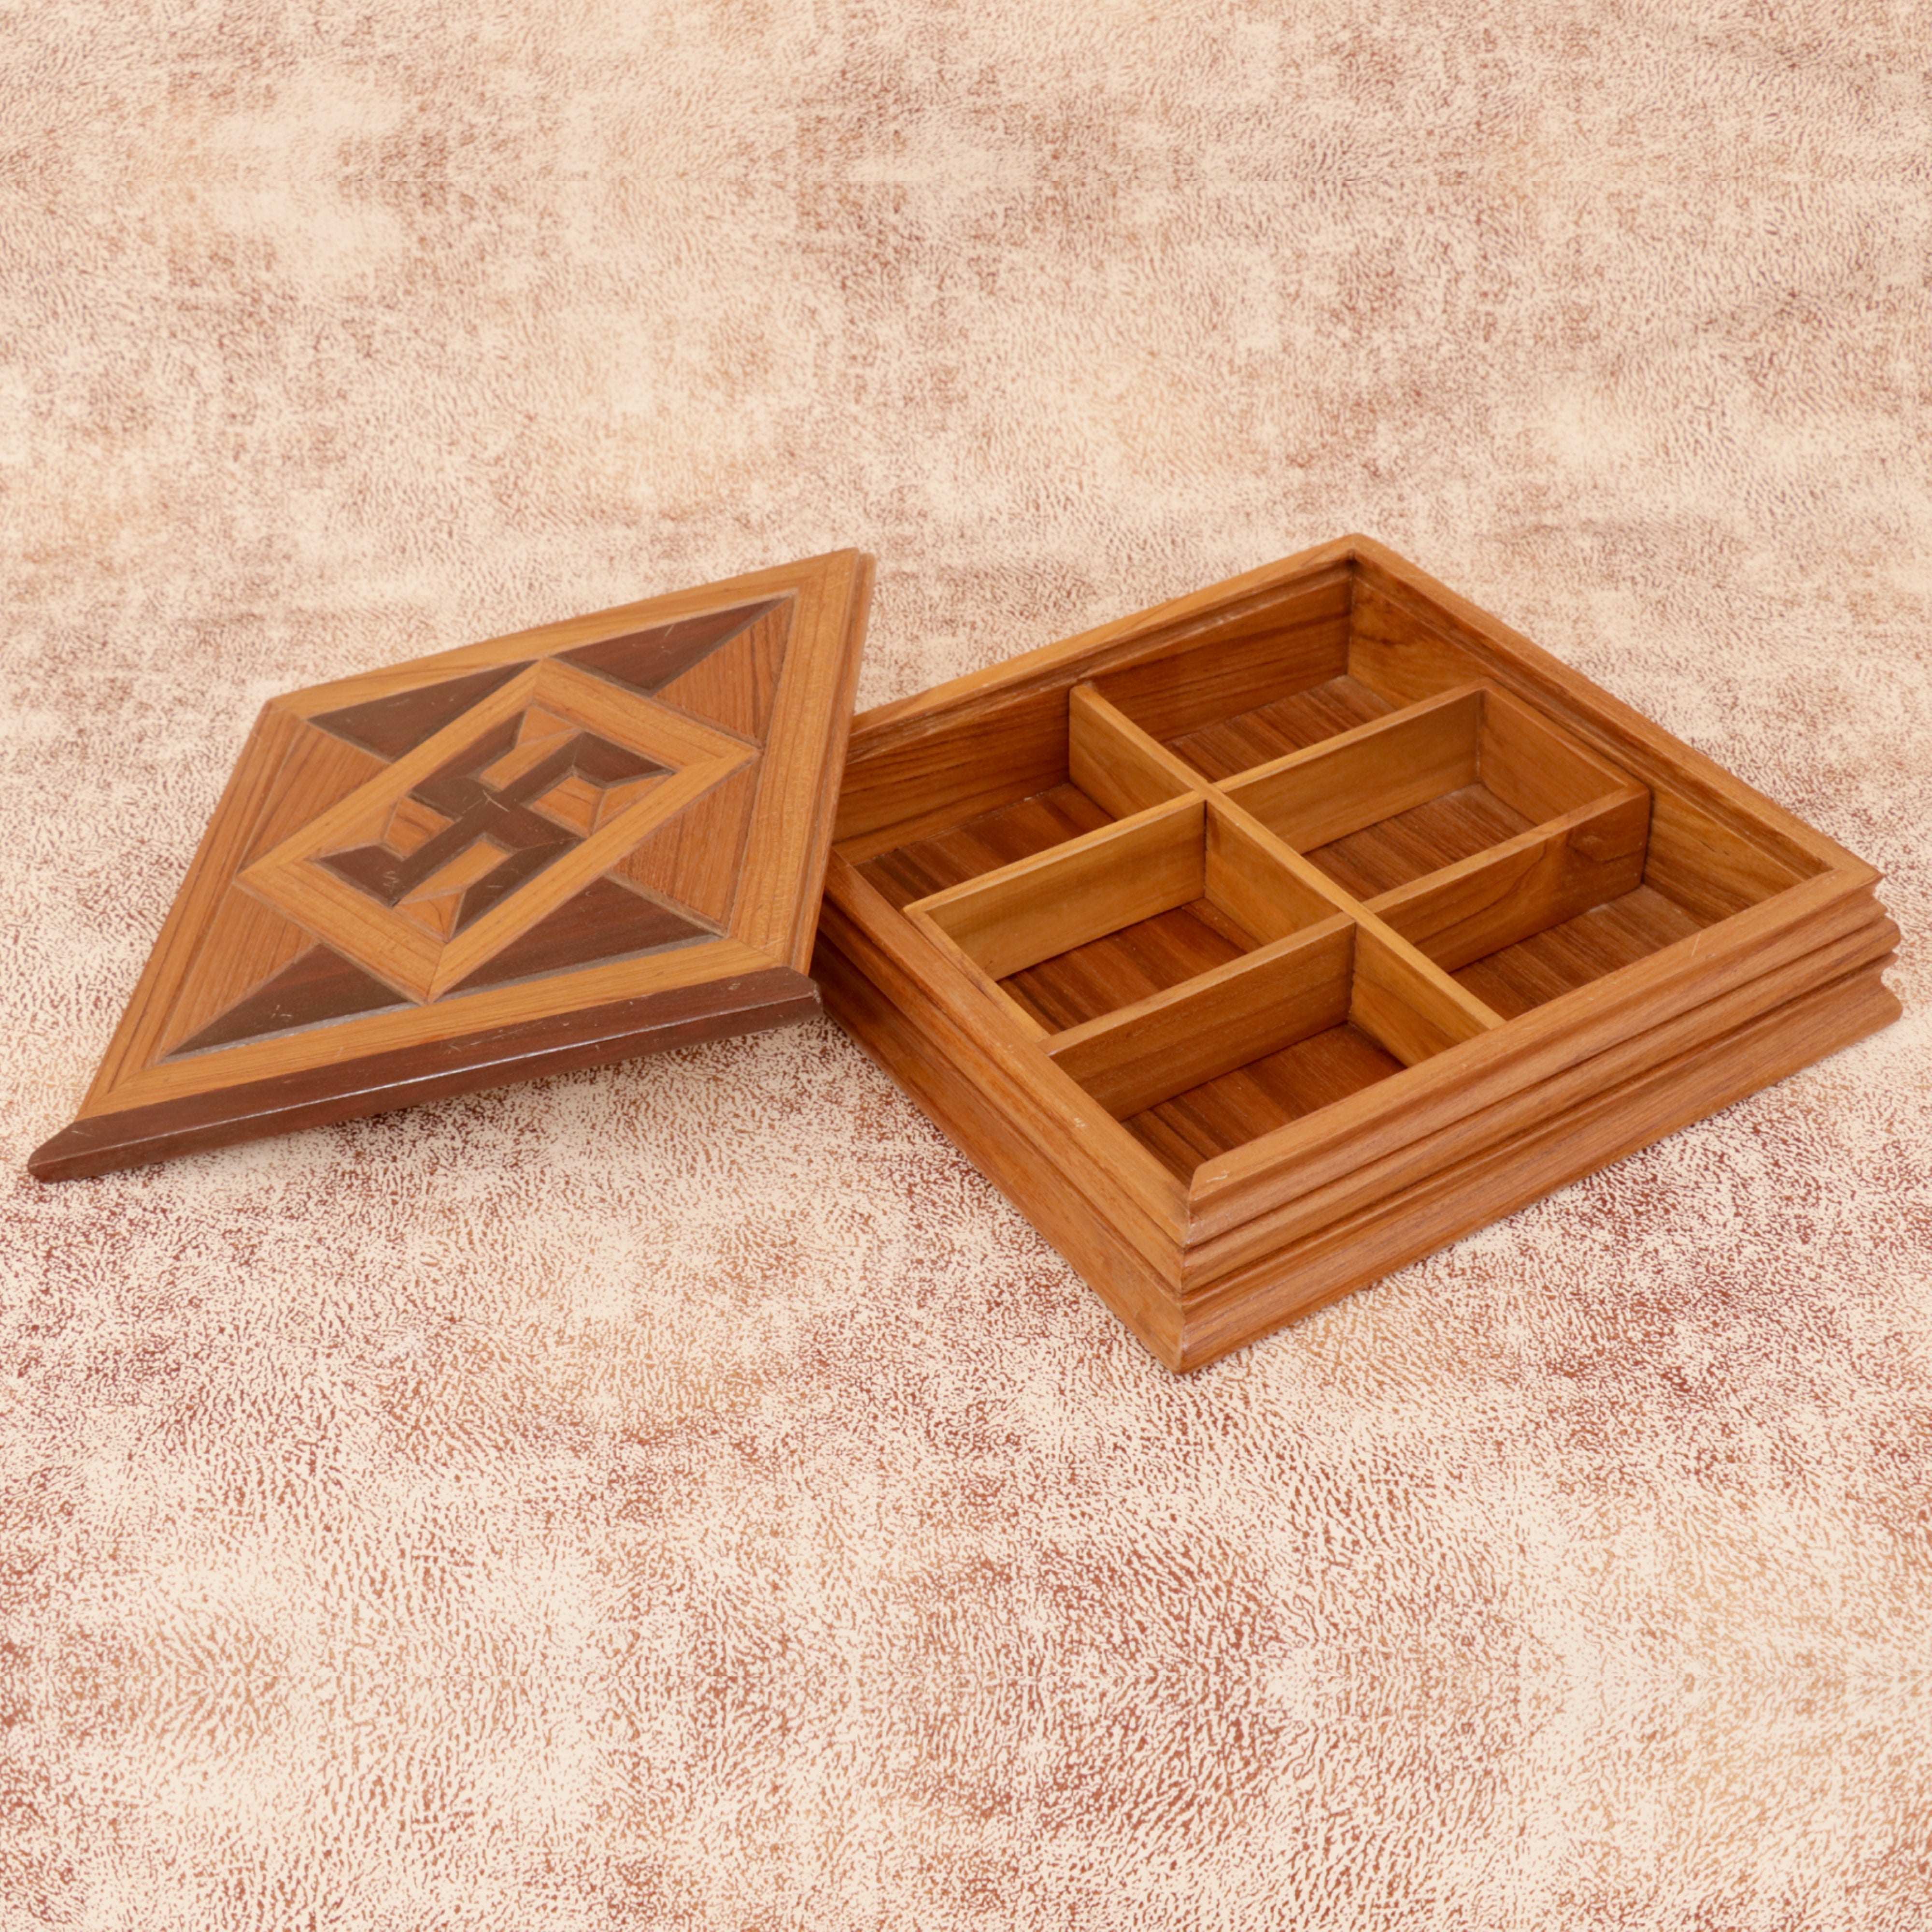 Swastika Pattern Box Wooden Box